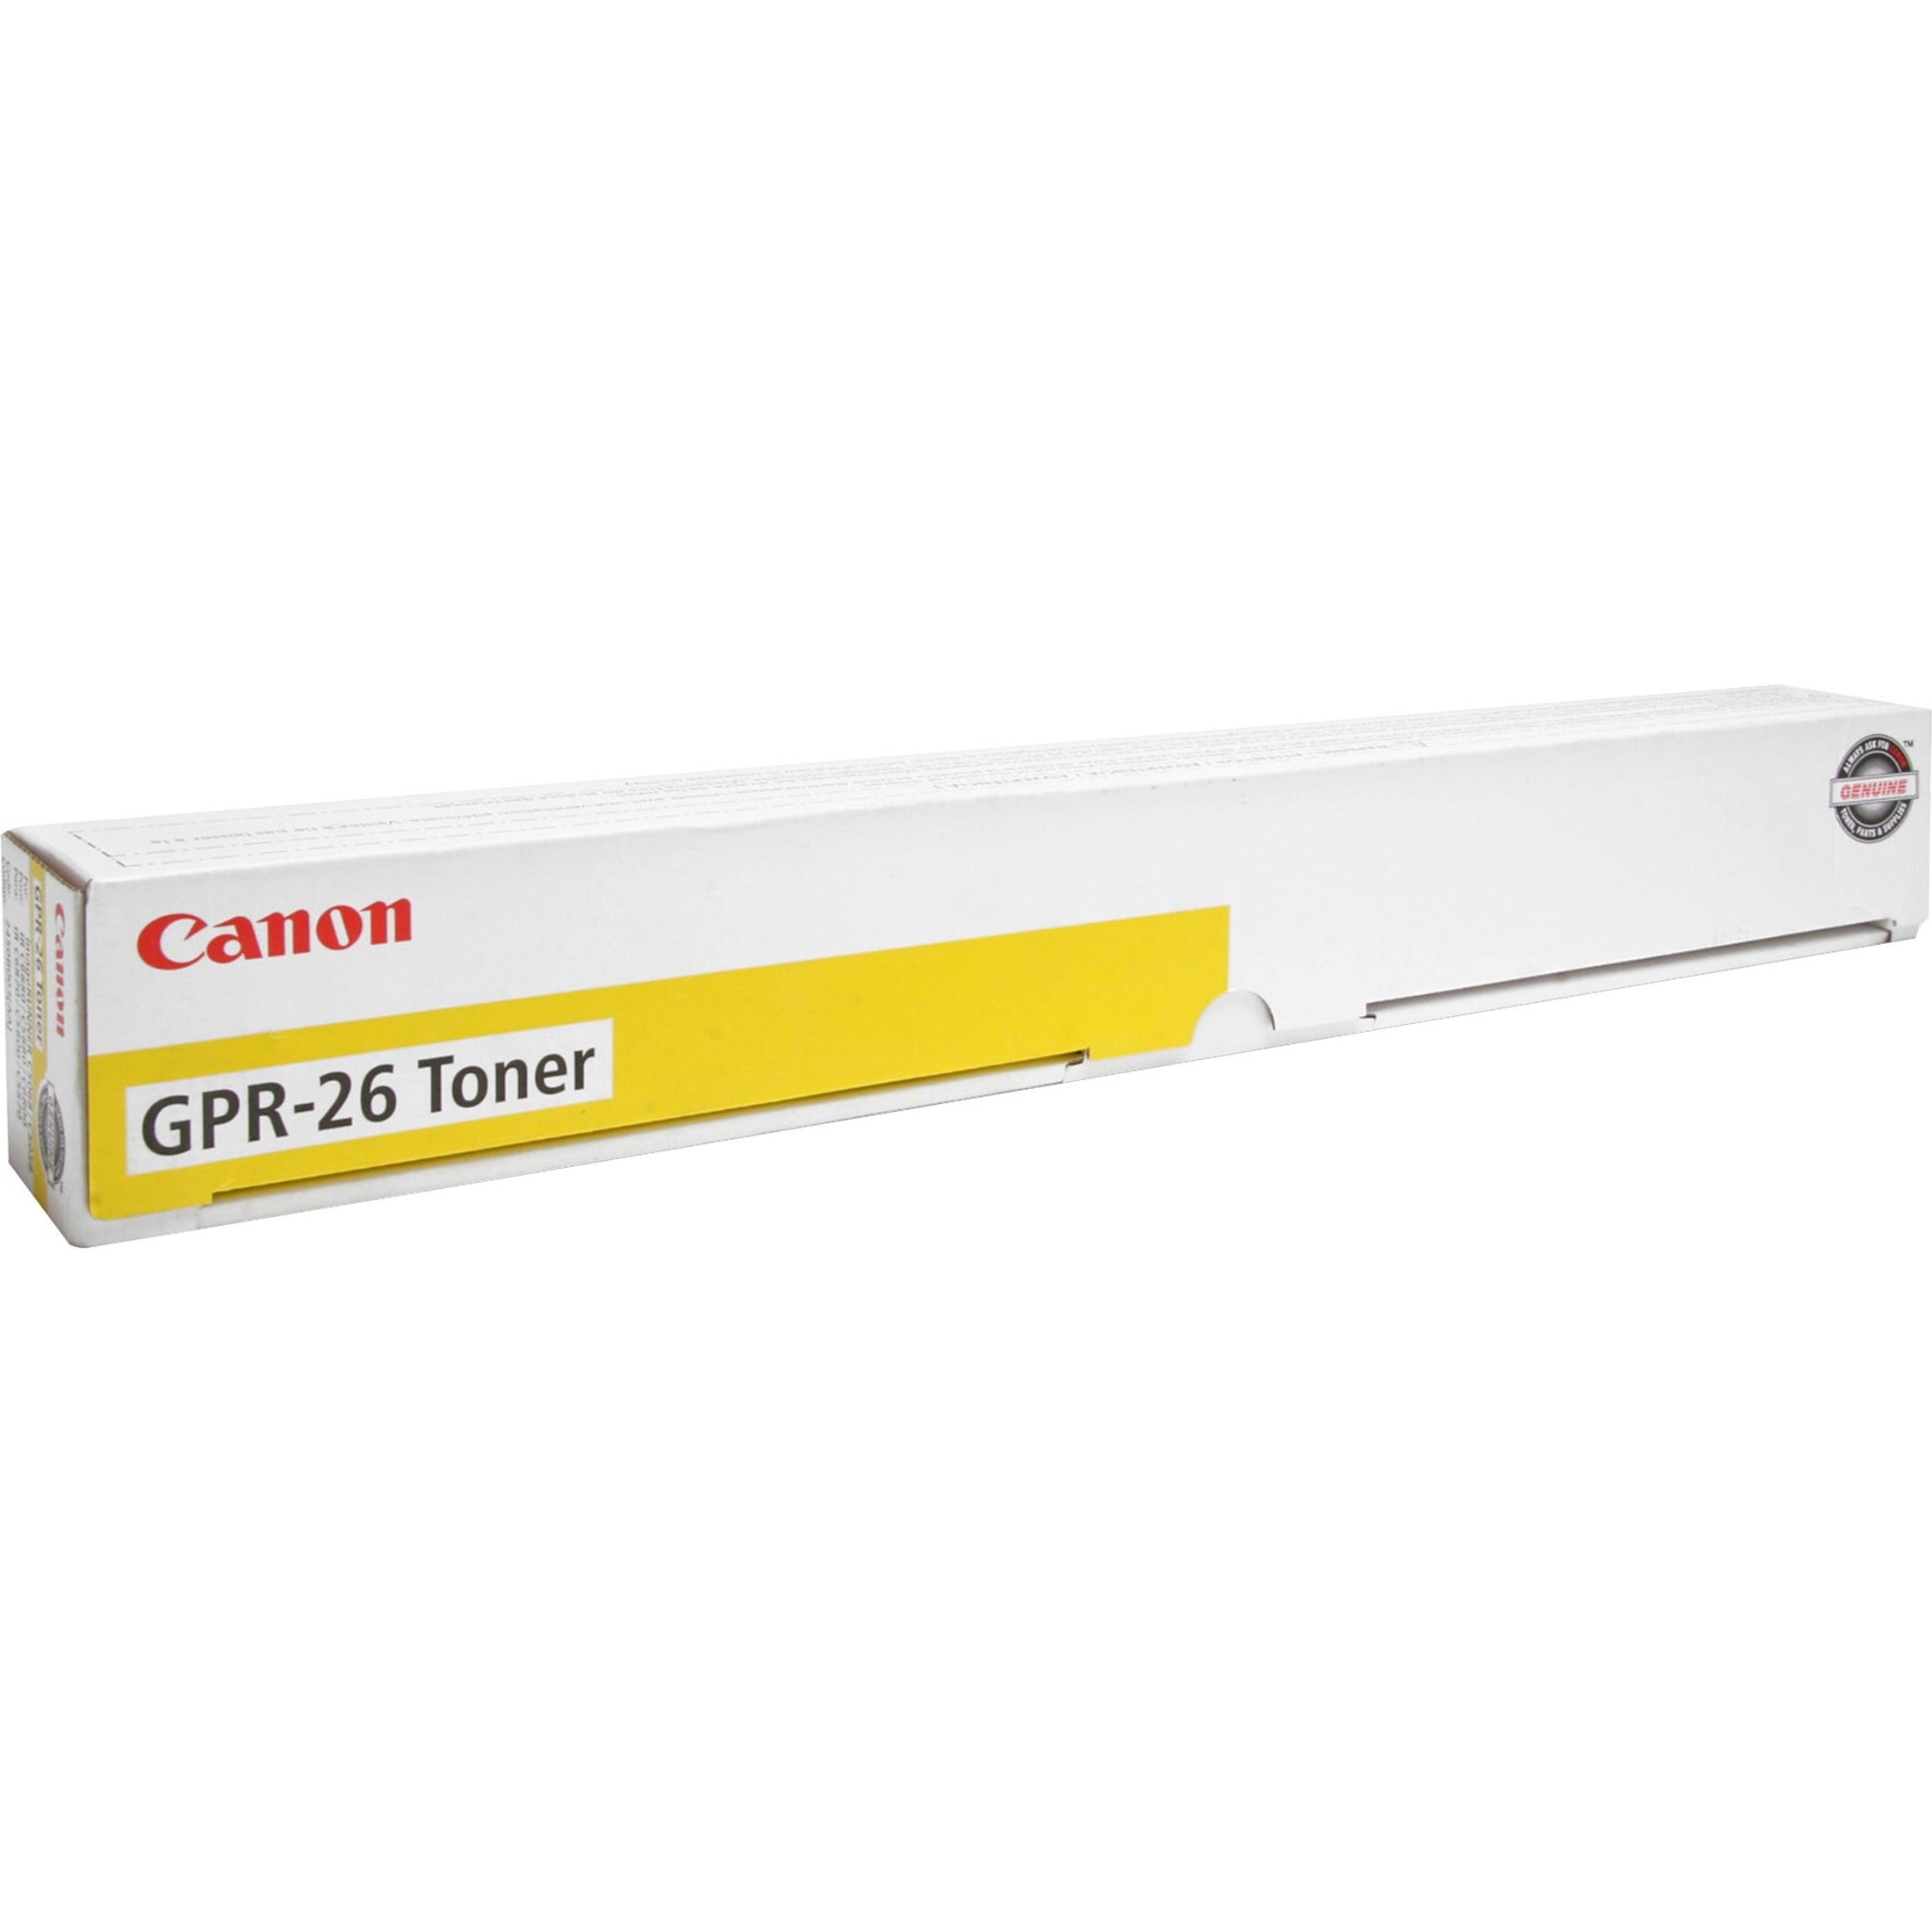 Canon 2450B003AA GPR26C Copier Toner Cartridge, Yellow, 9500 Pages